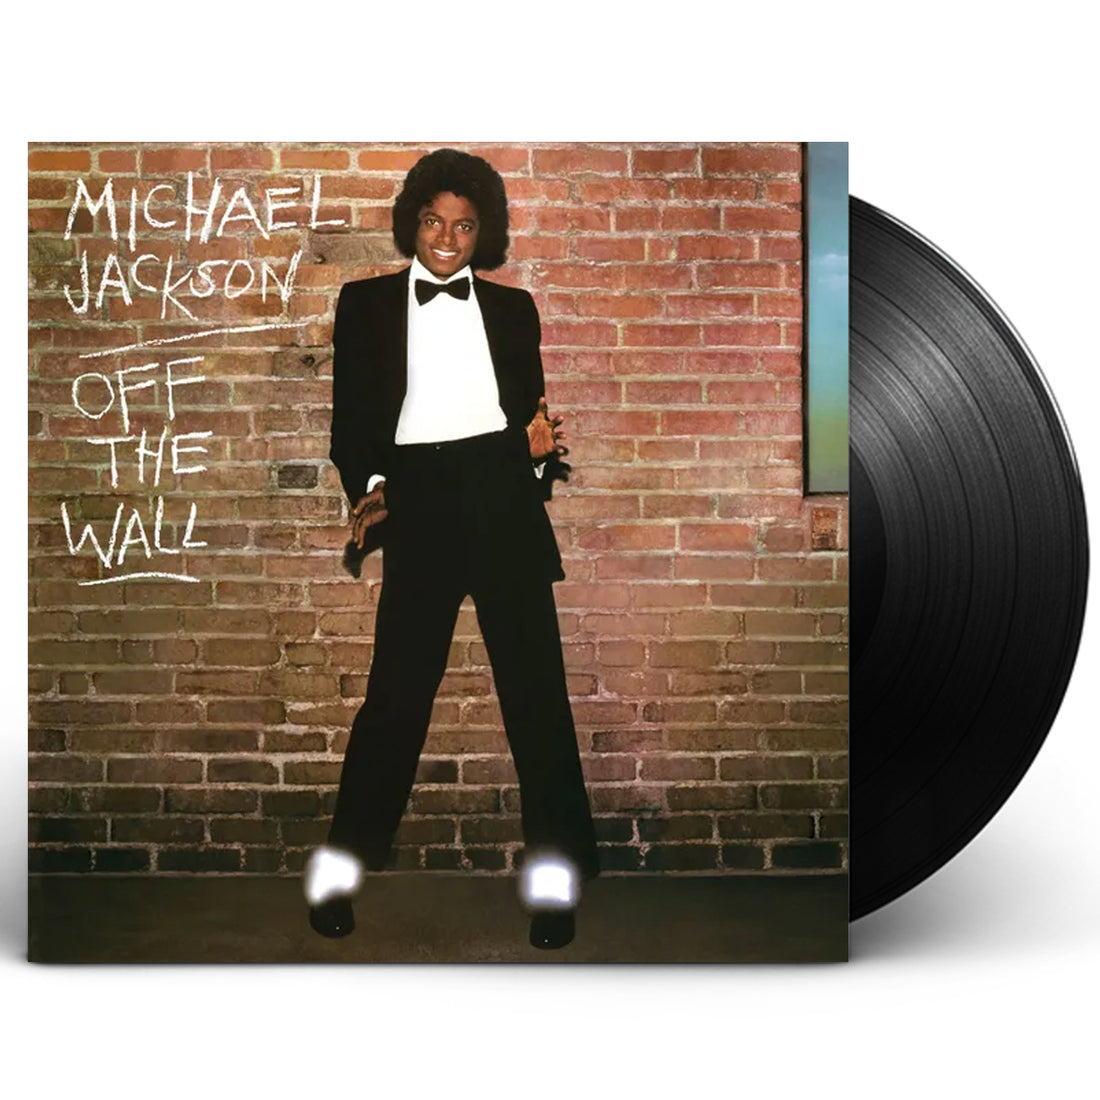 Michael Jackson "Off the Wall" LP Vinyl